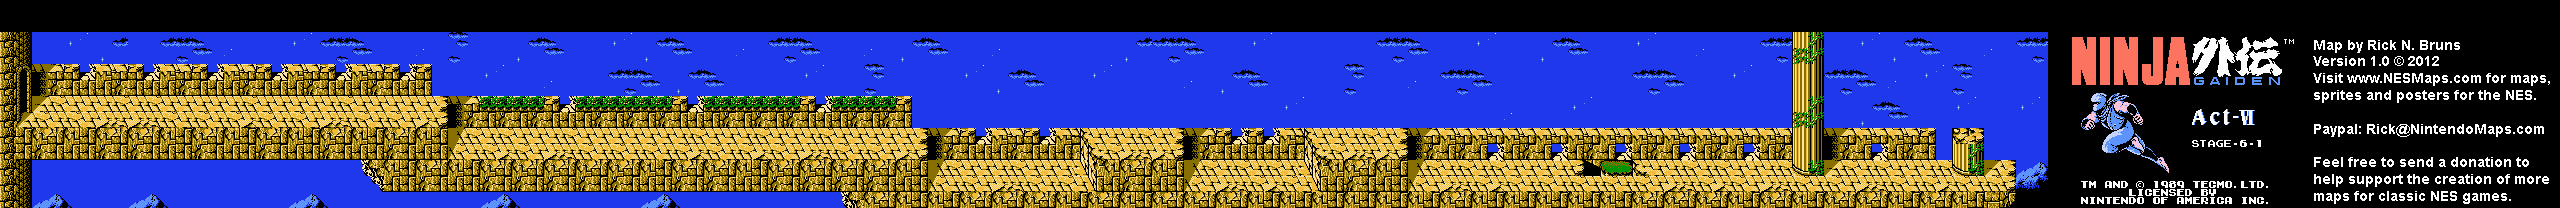 Ninja Gaiden - Stage 6-1 - Nintendo NES Map BG